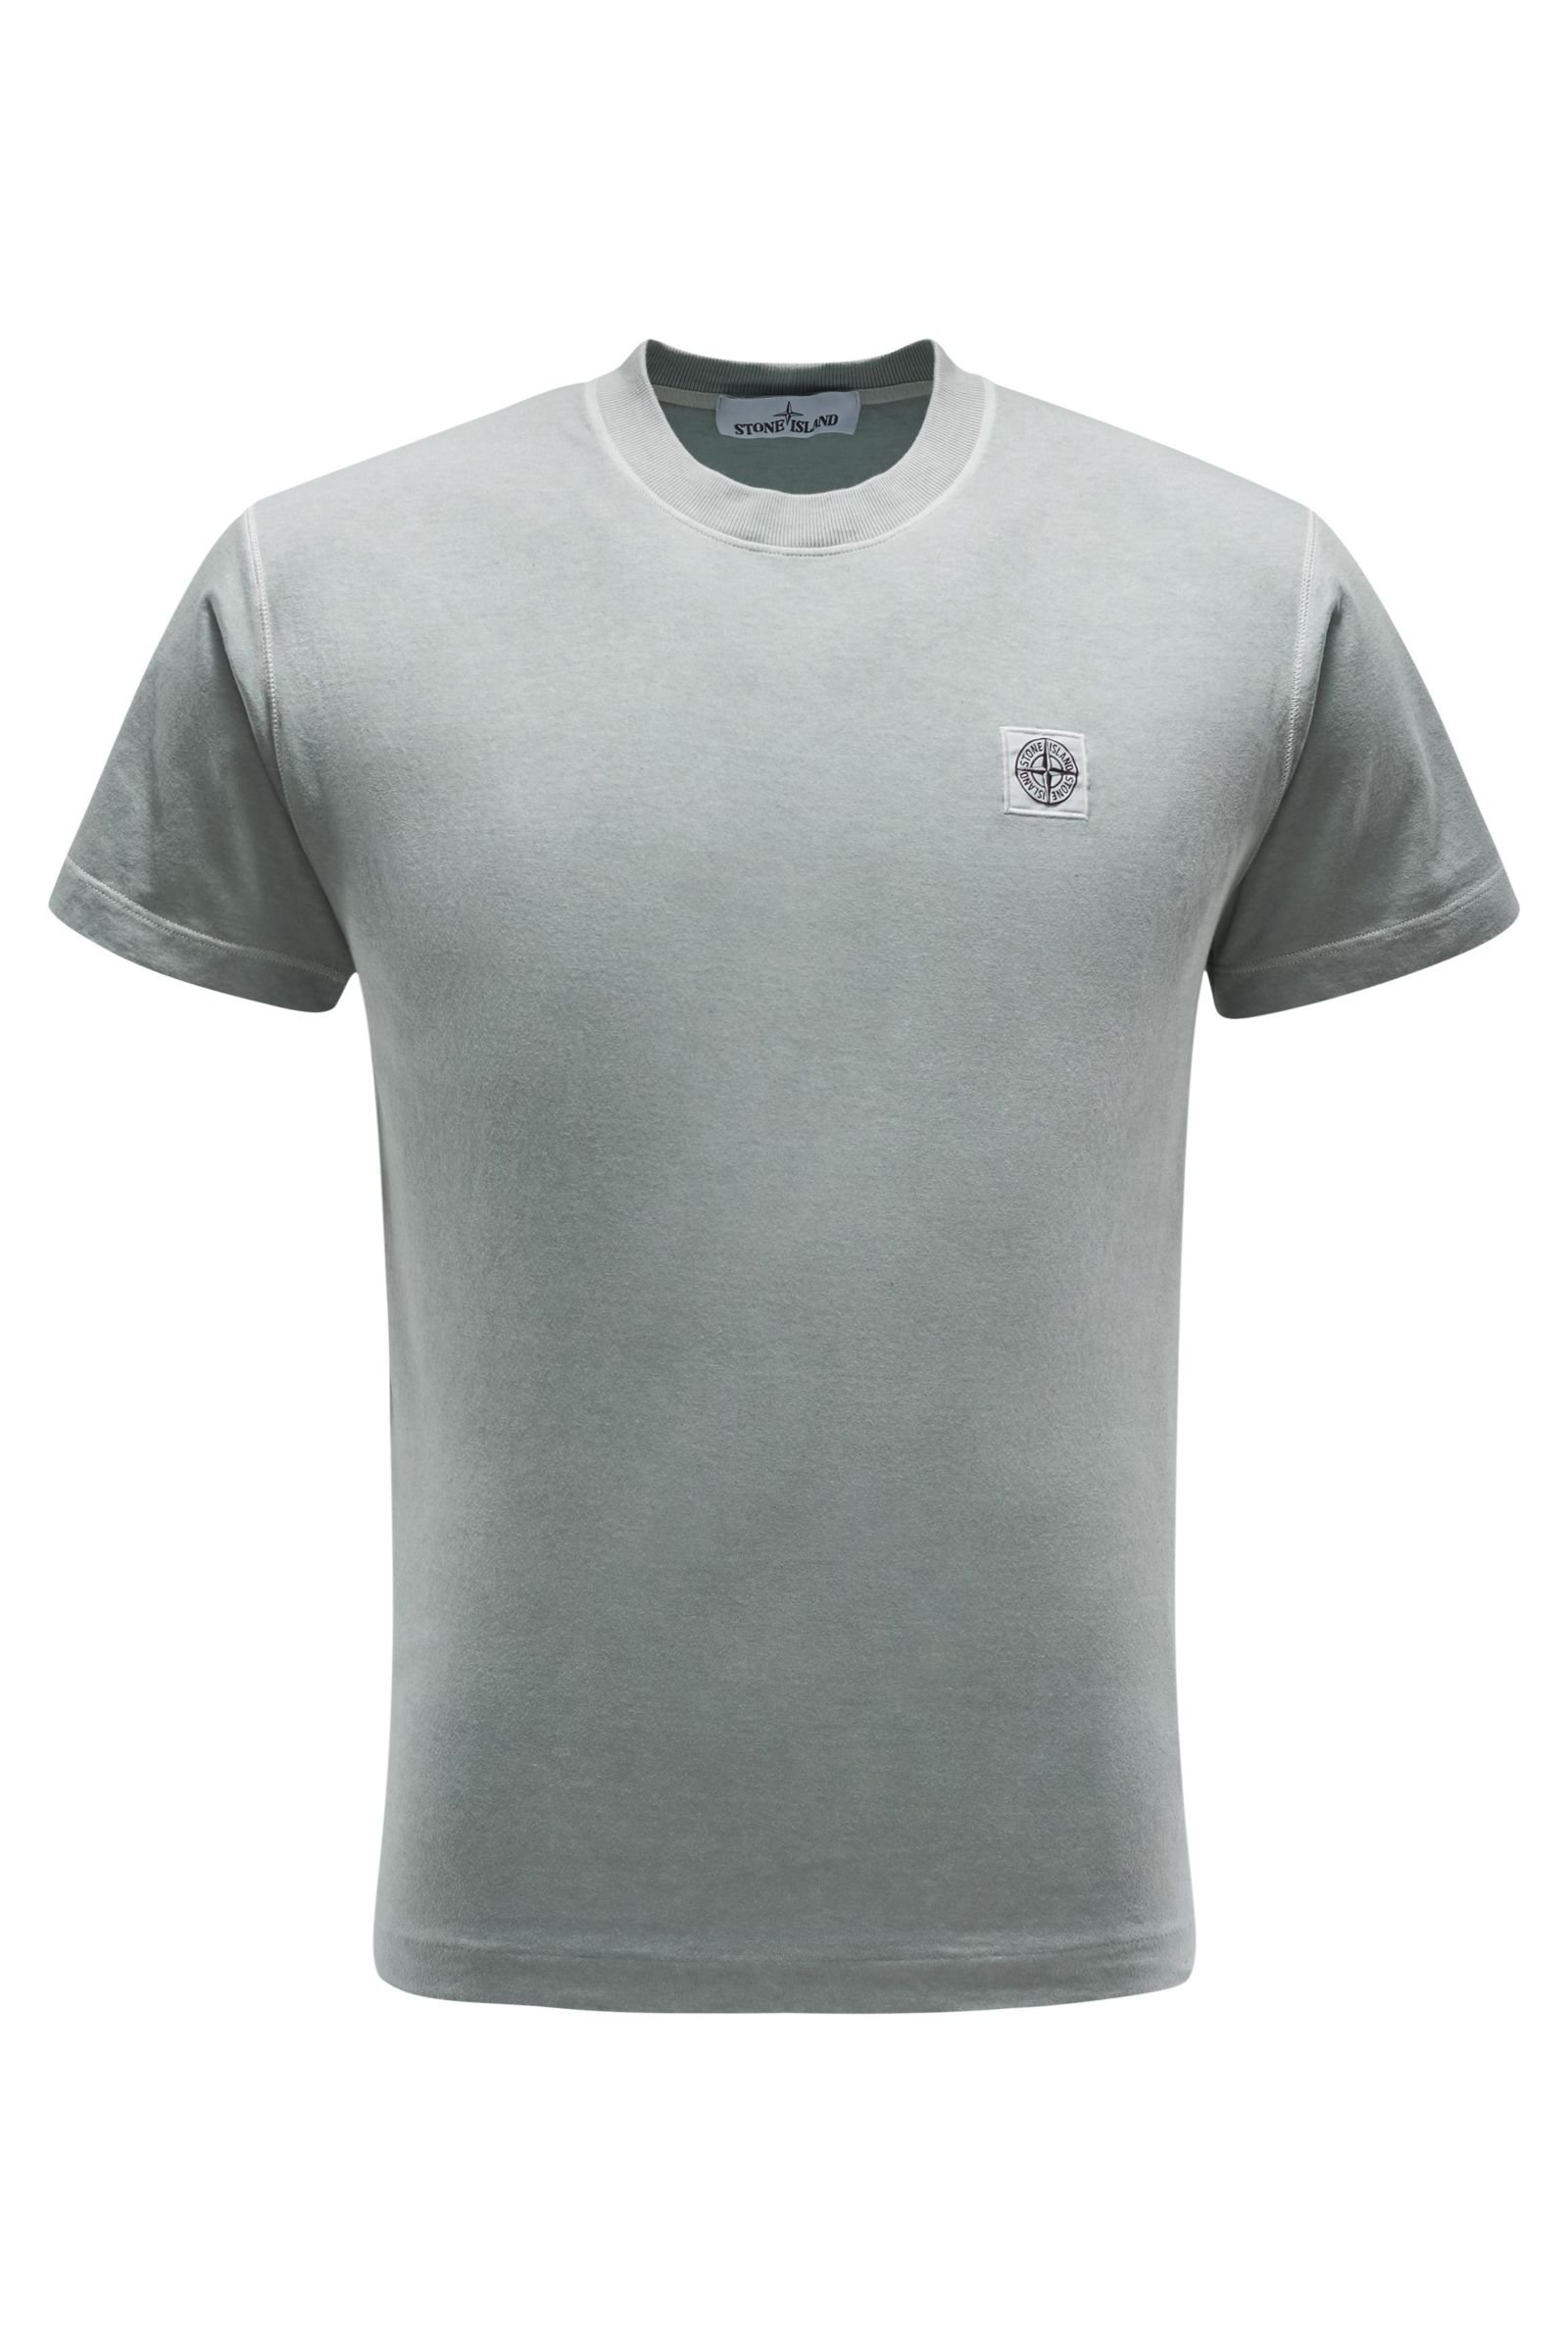 Crew neck T-shirt grey green